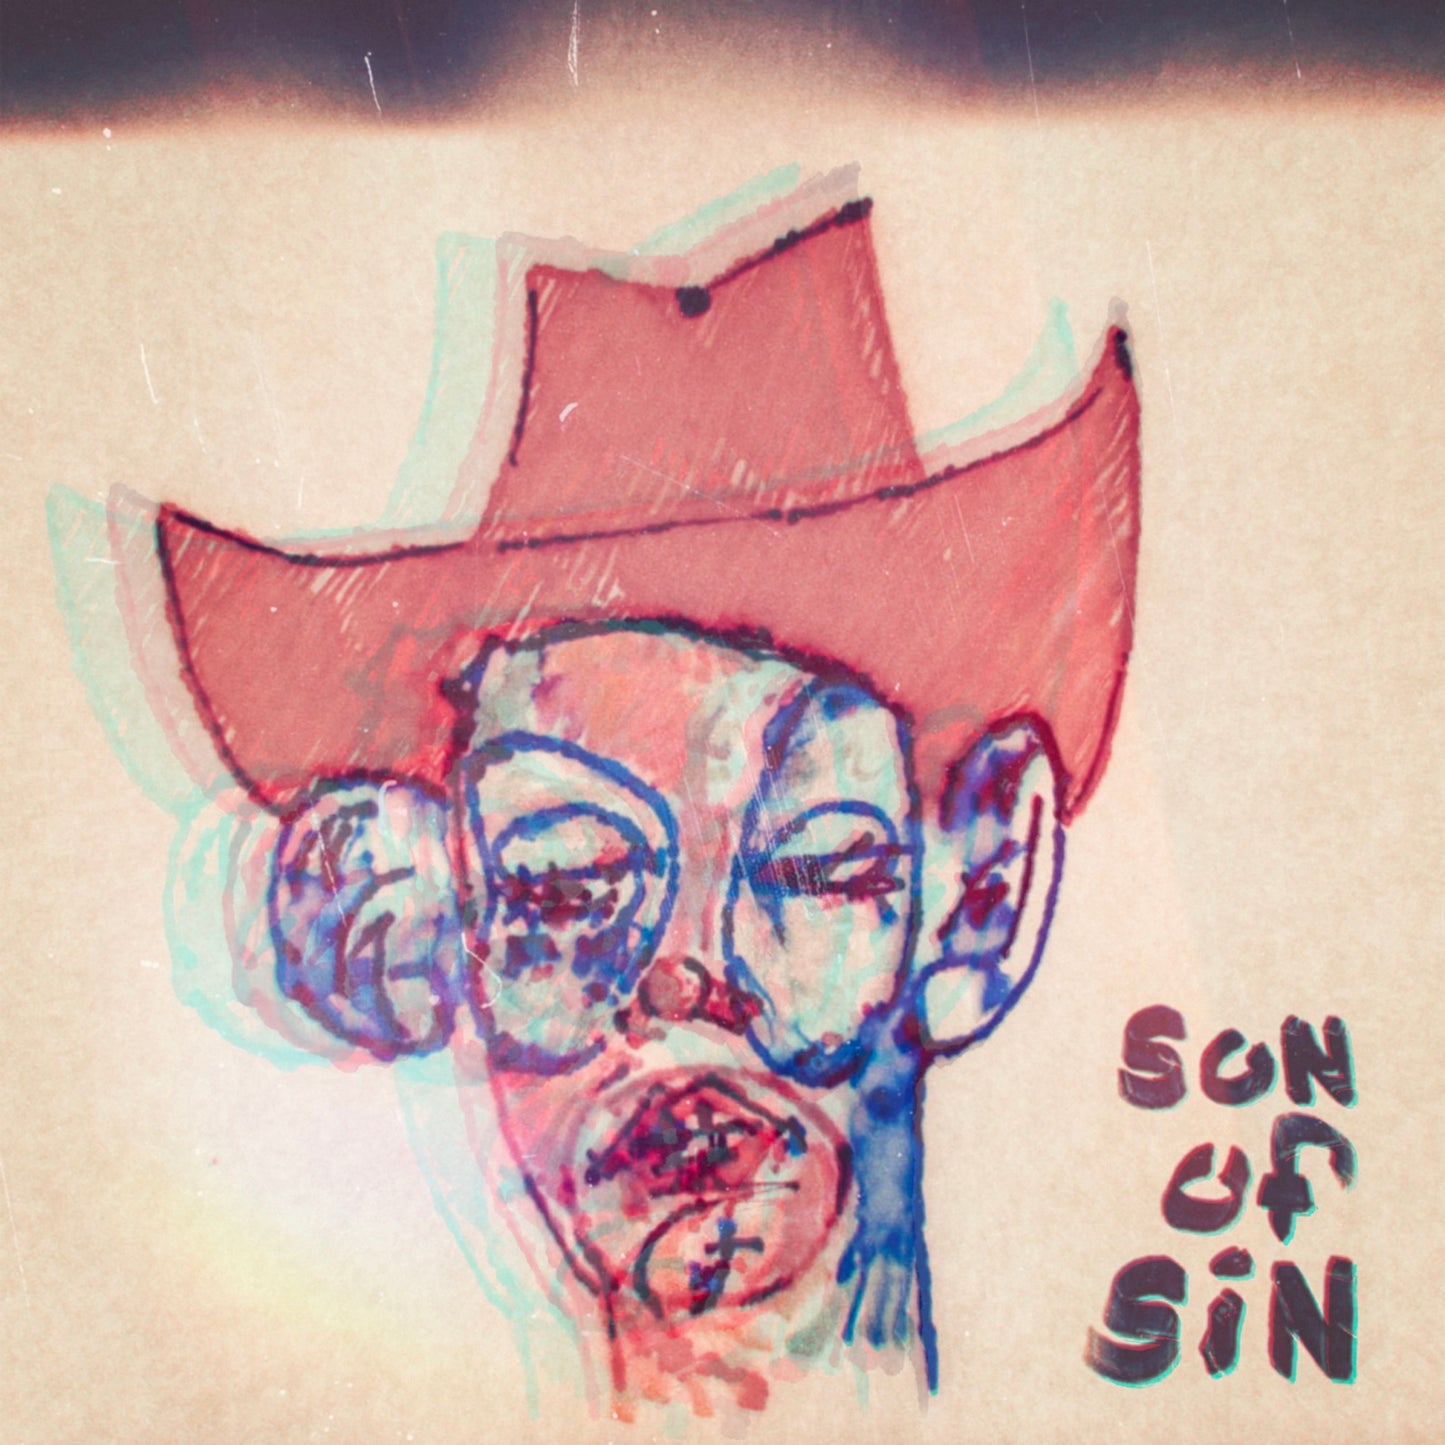 Hank Williams IV - “Son Of Sin” 7” - NEW!